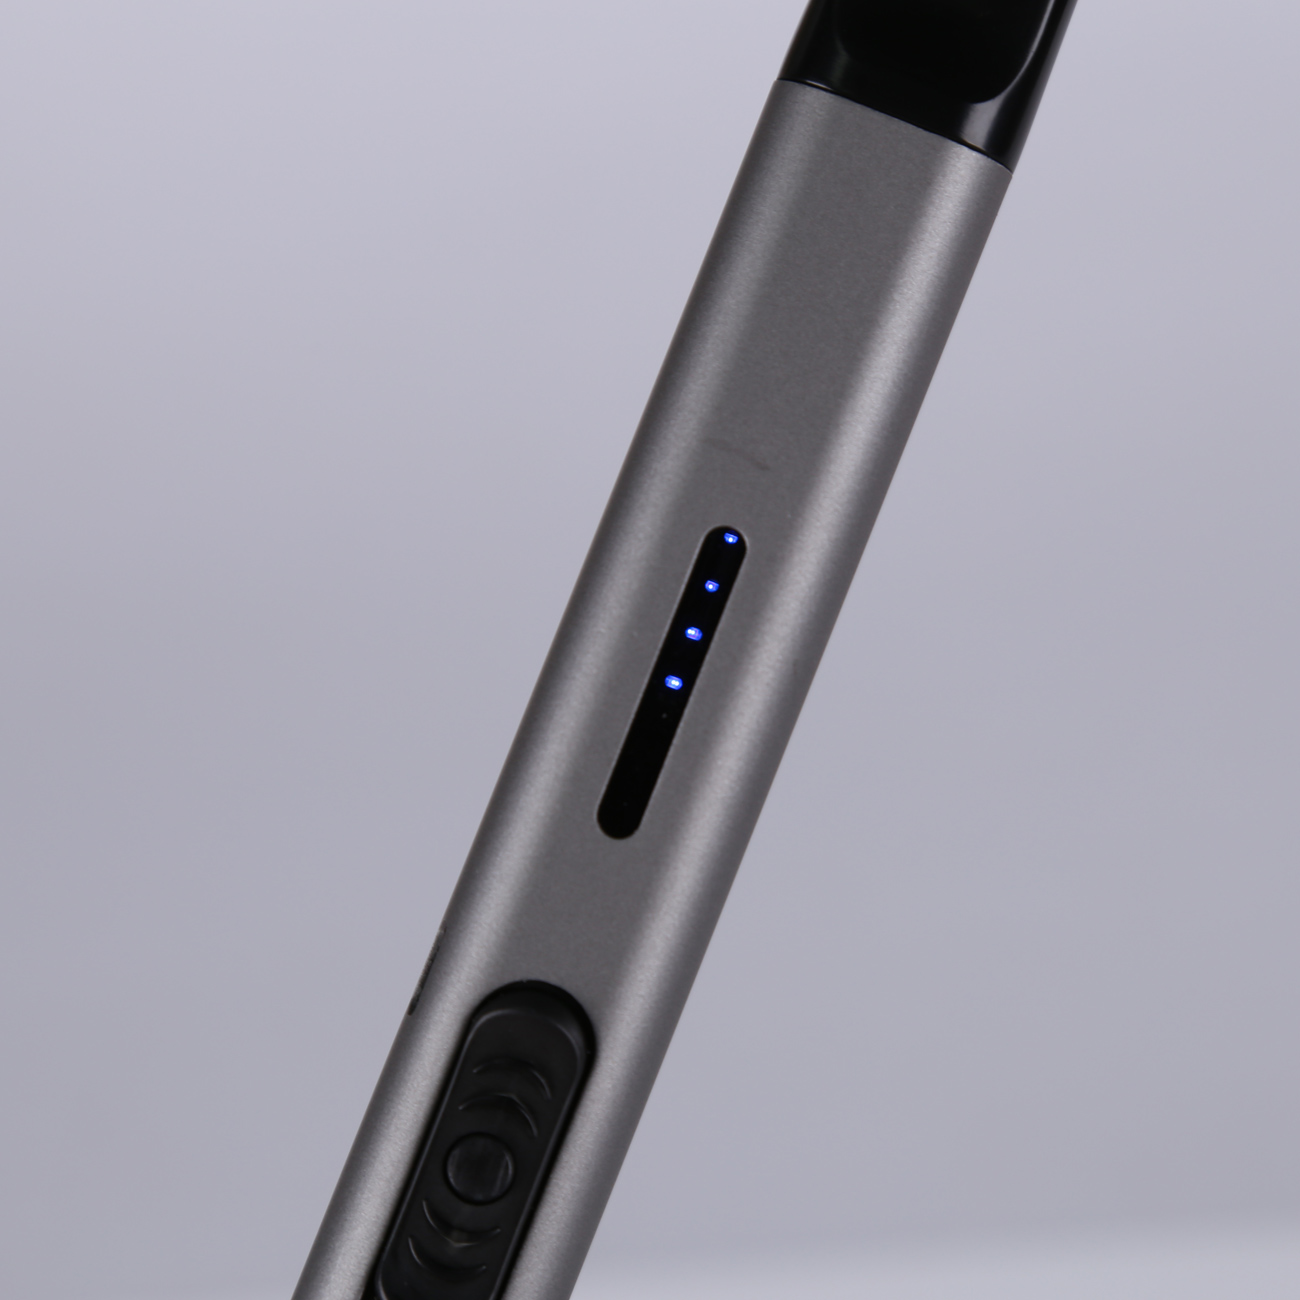 Kyutec TenTon Design-USB-Stabfeuerzeug